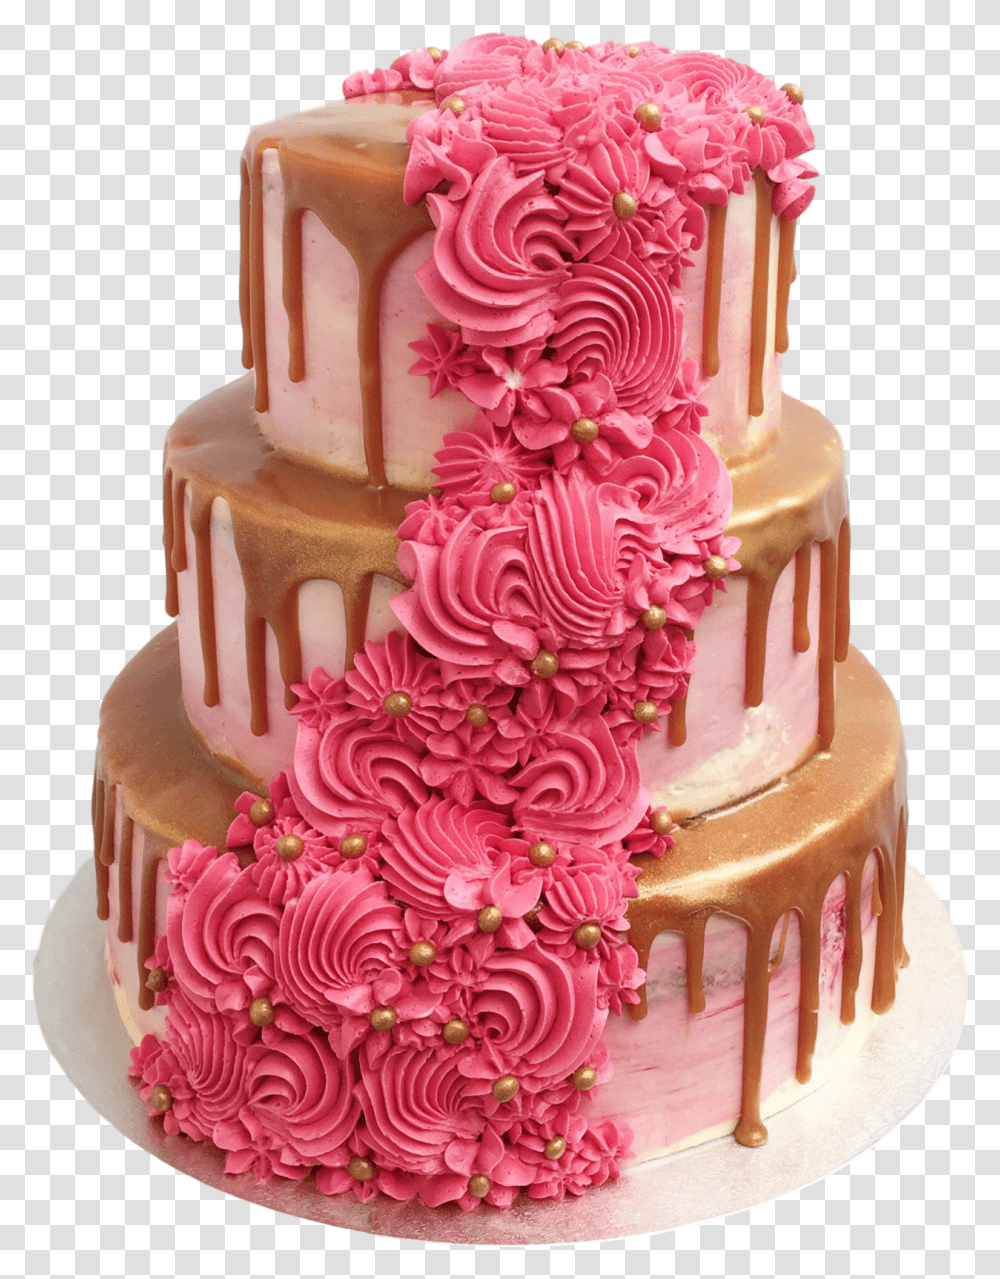 Clip Art Pink Gold Cakes Cake Images Hd, Dessert, Food, Wedding Cake, Birthday Cake Transparent Png